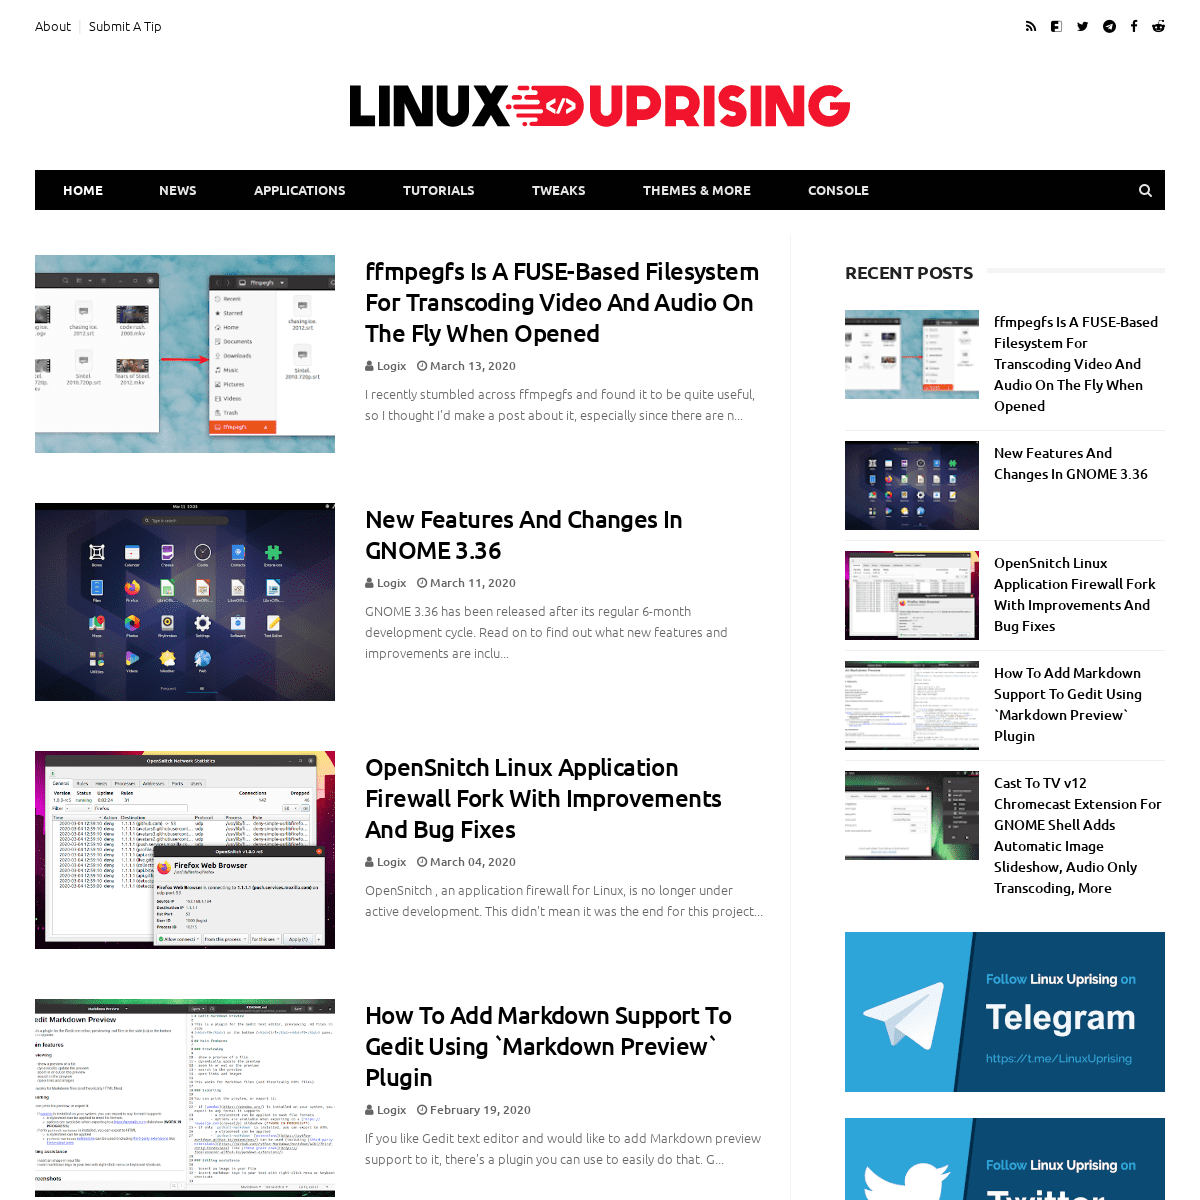 A complete backup of linuxuprising.com